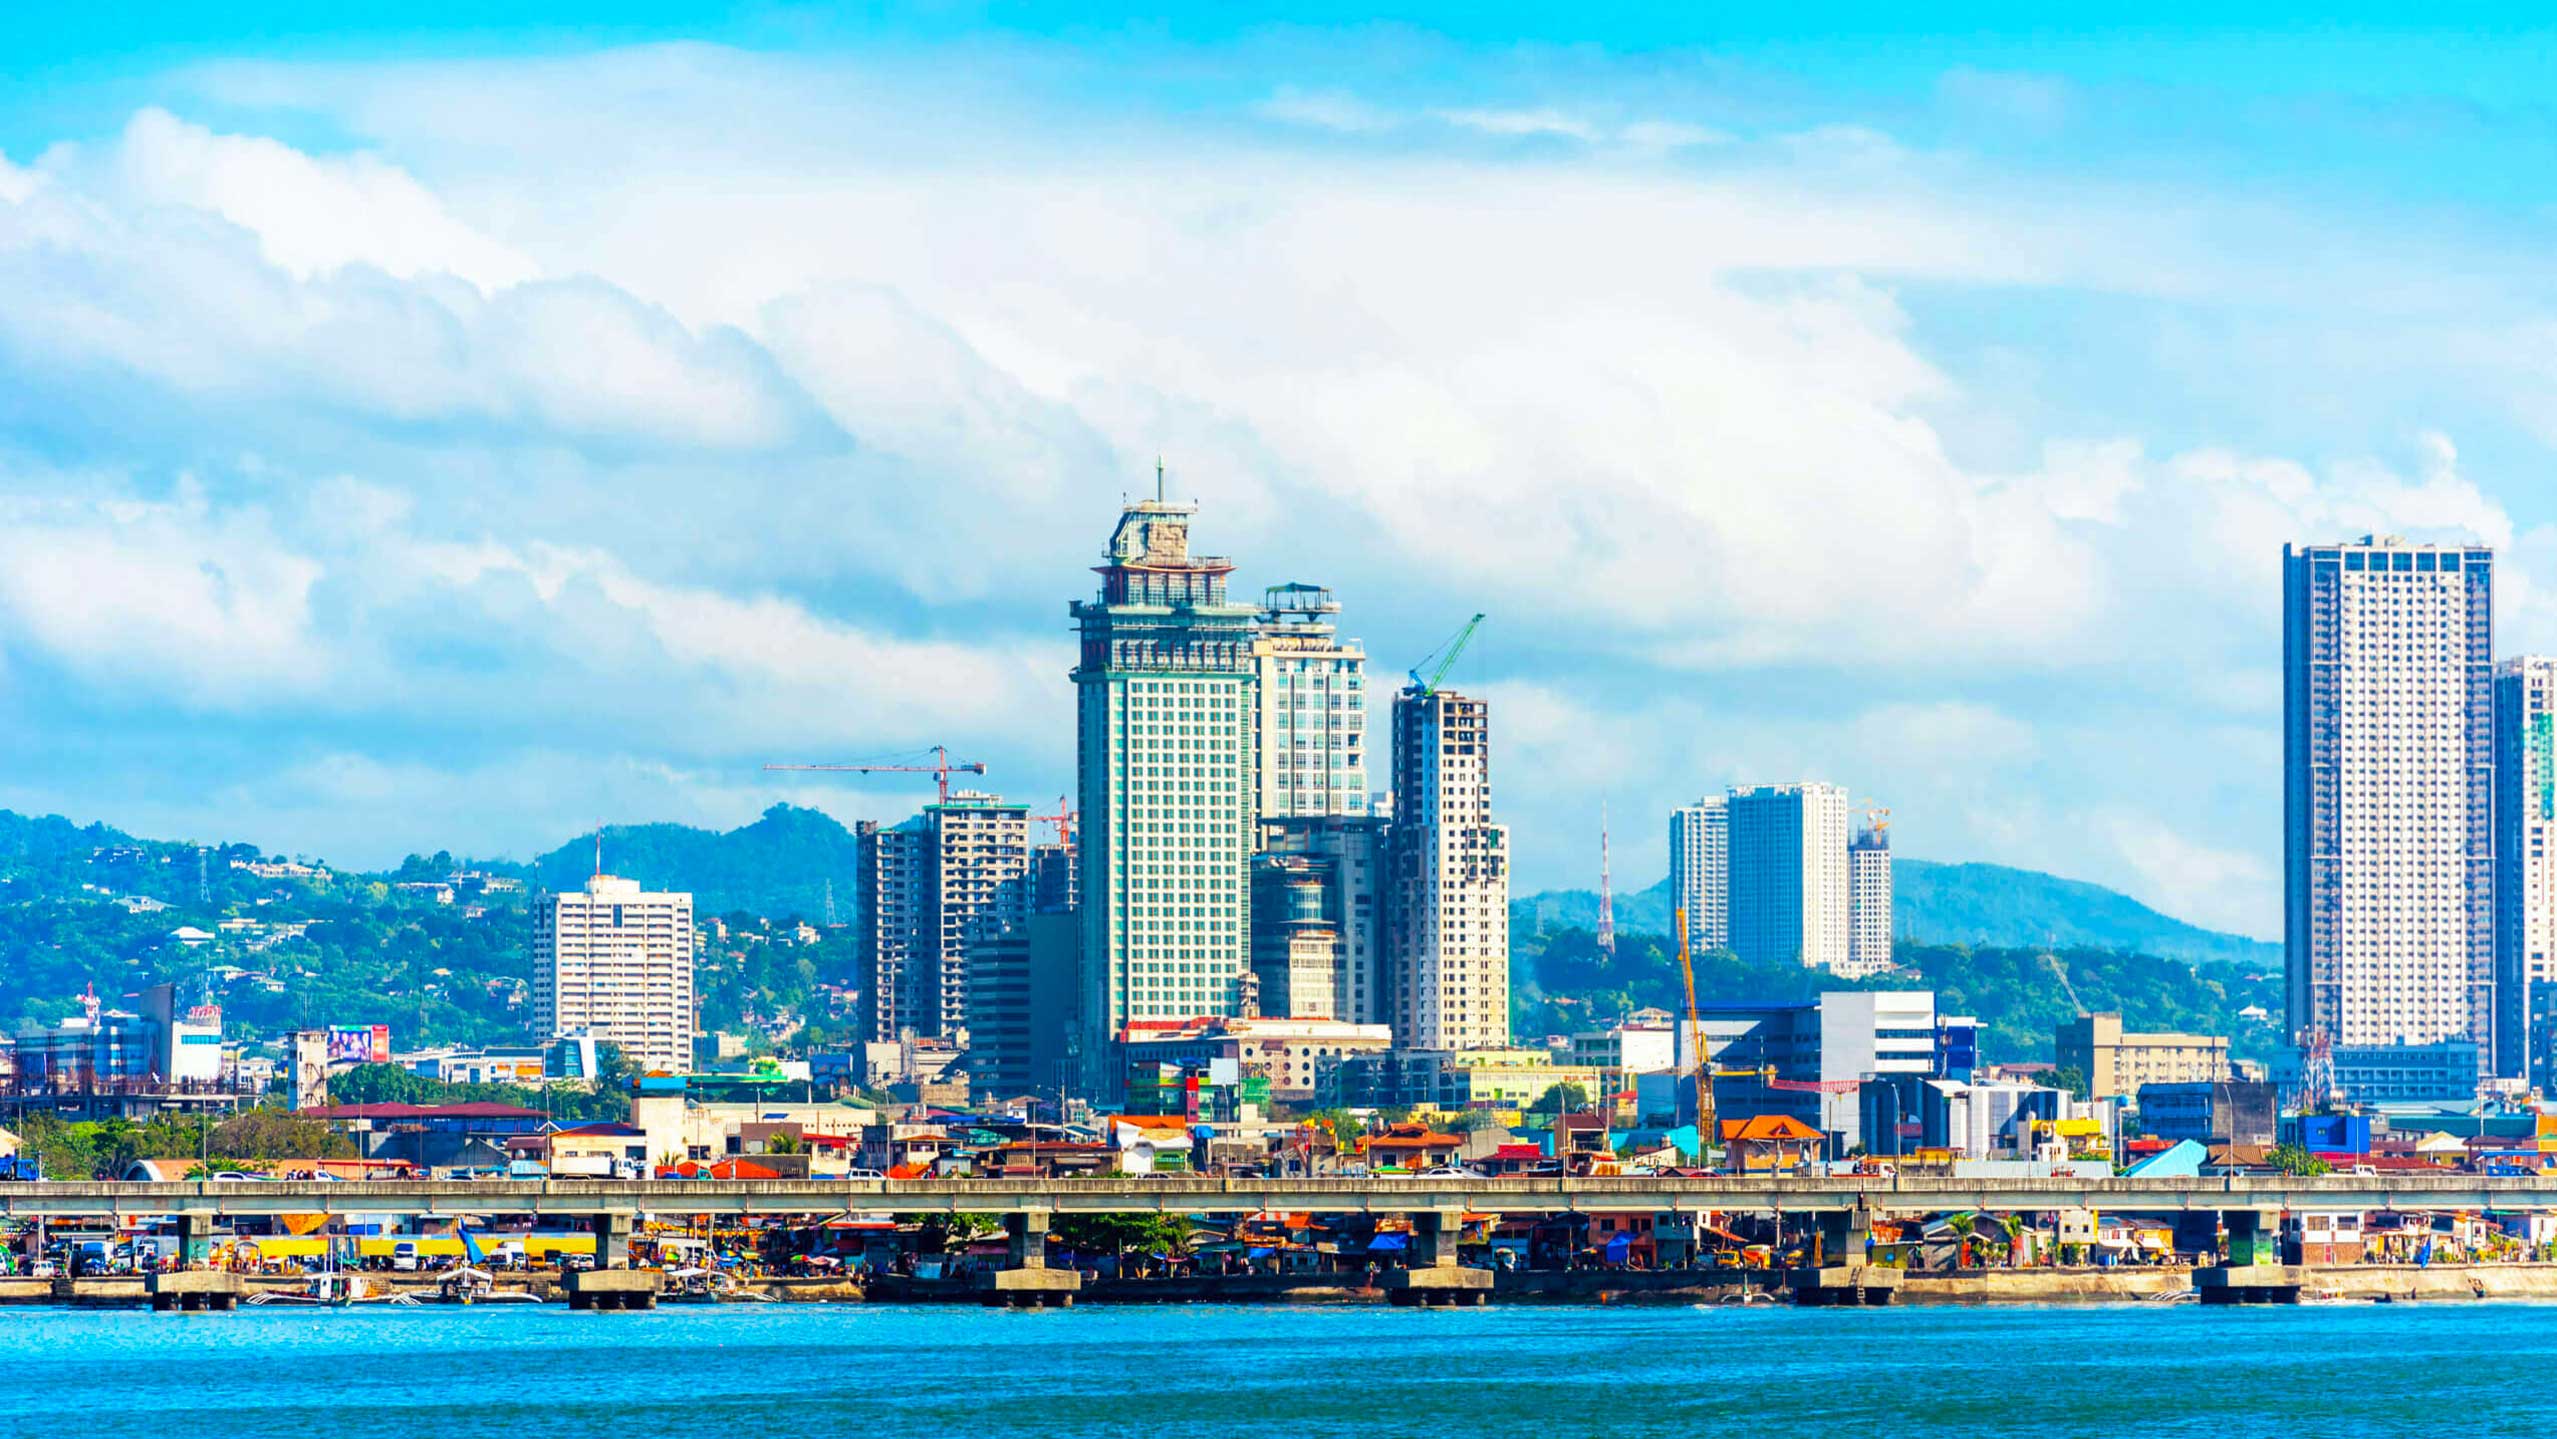 Photo of the Cebu skyline